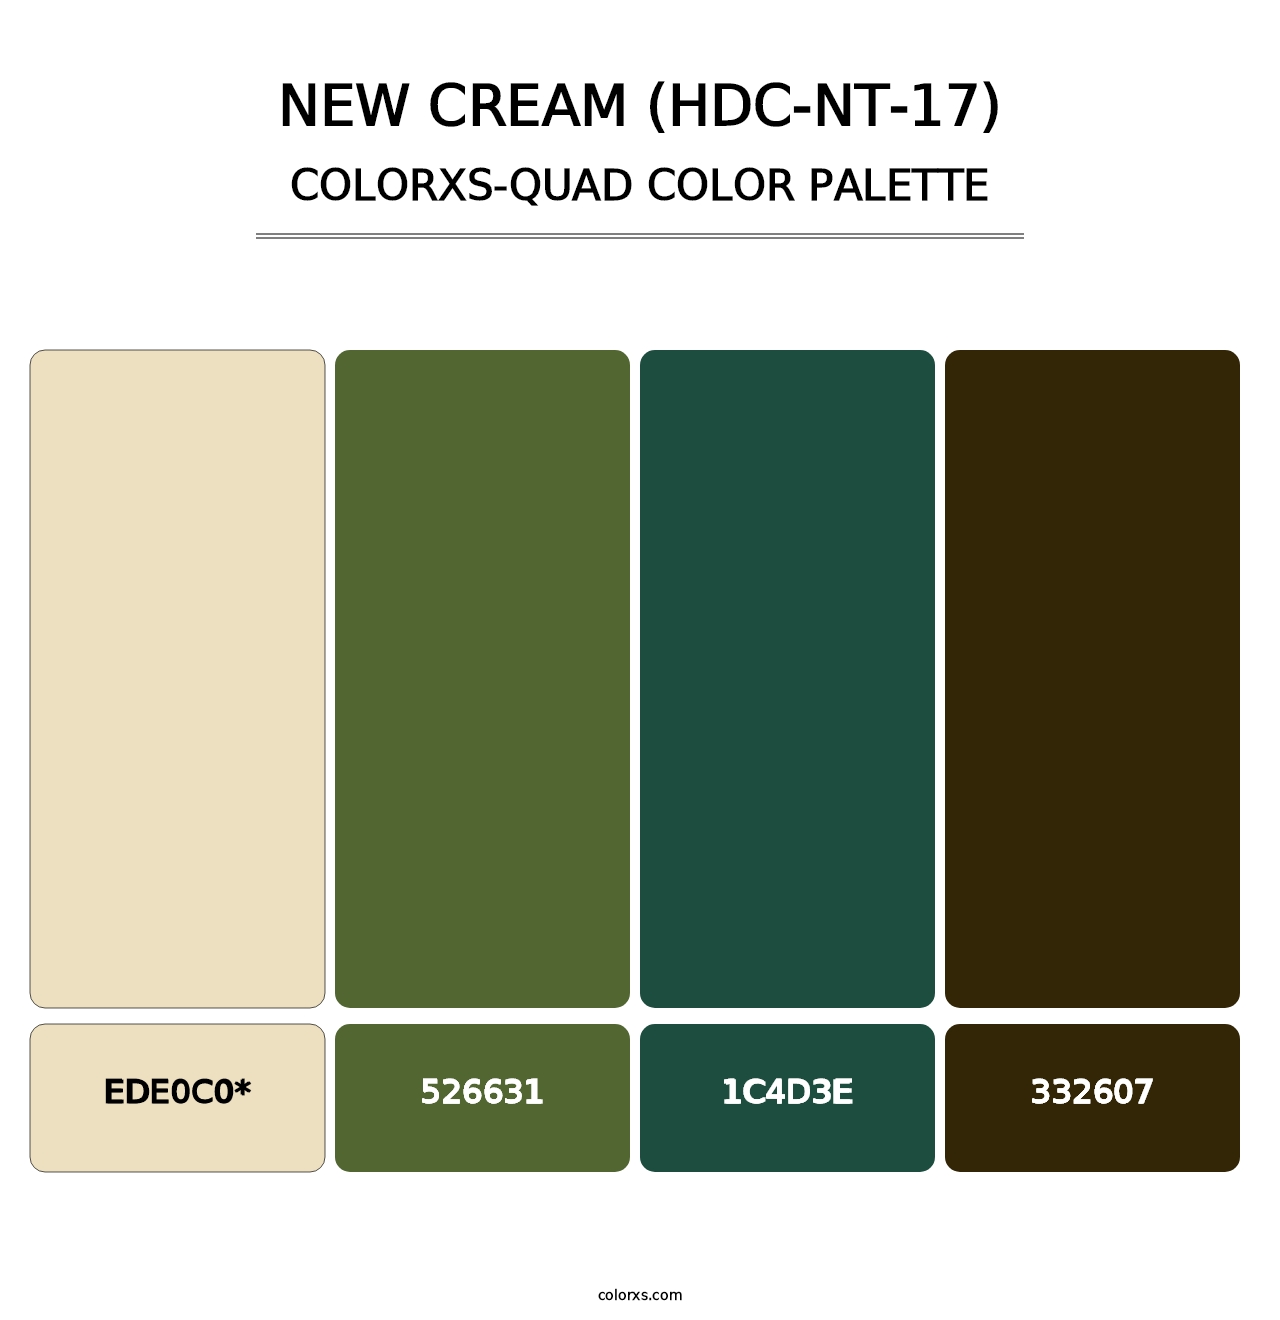 New Cream (HDC-NT-17) - Colorxs Quad Palette